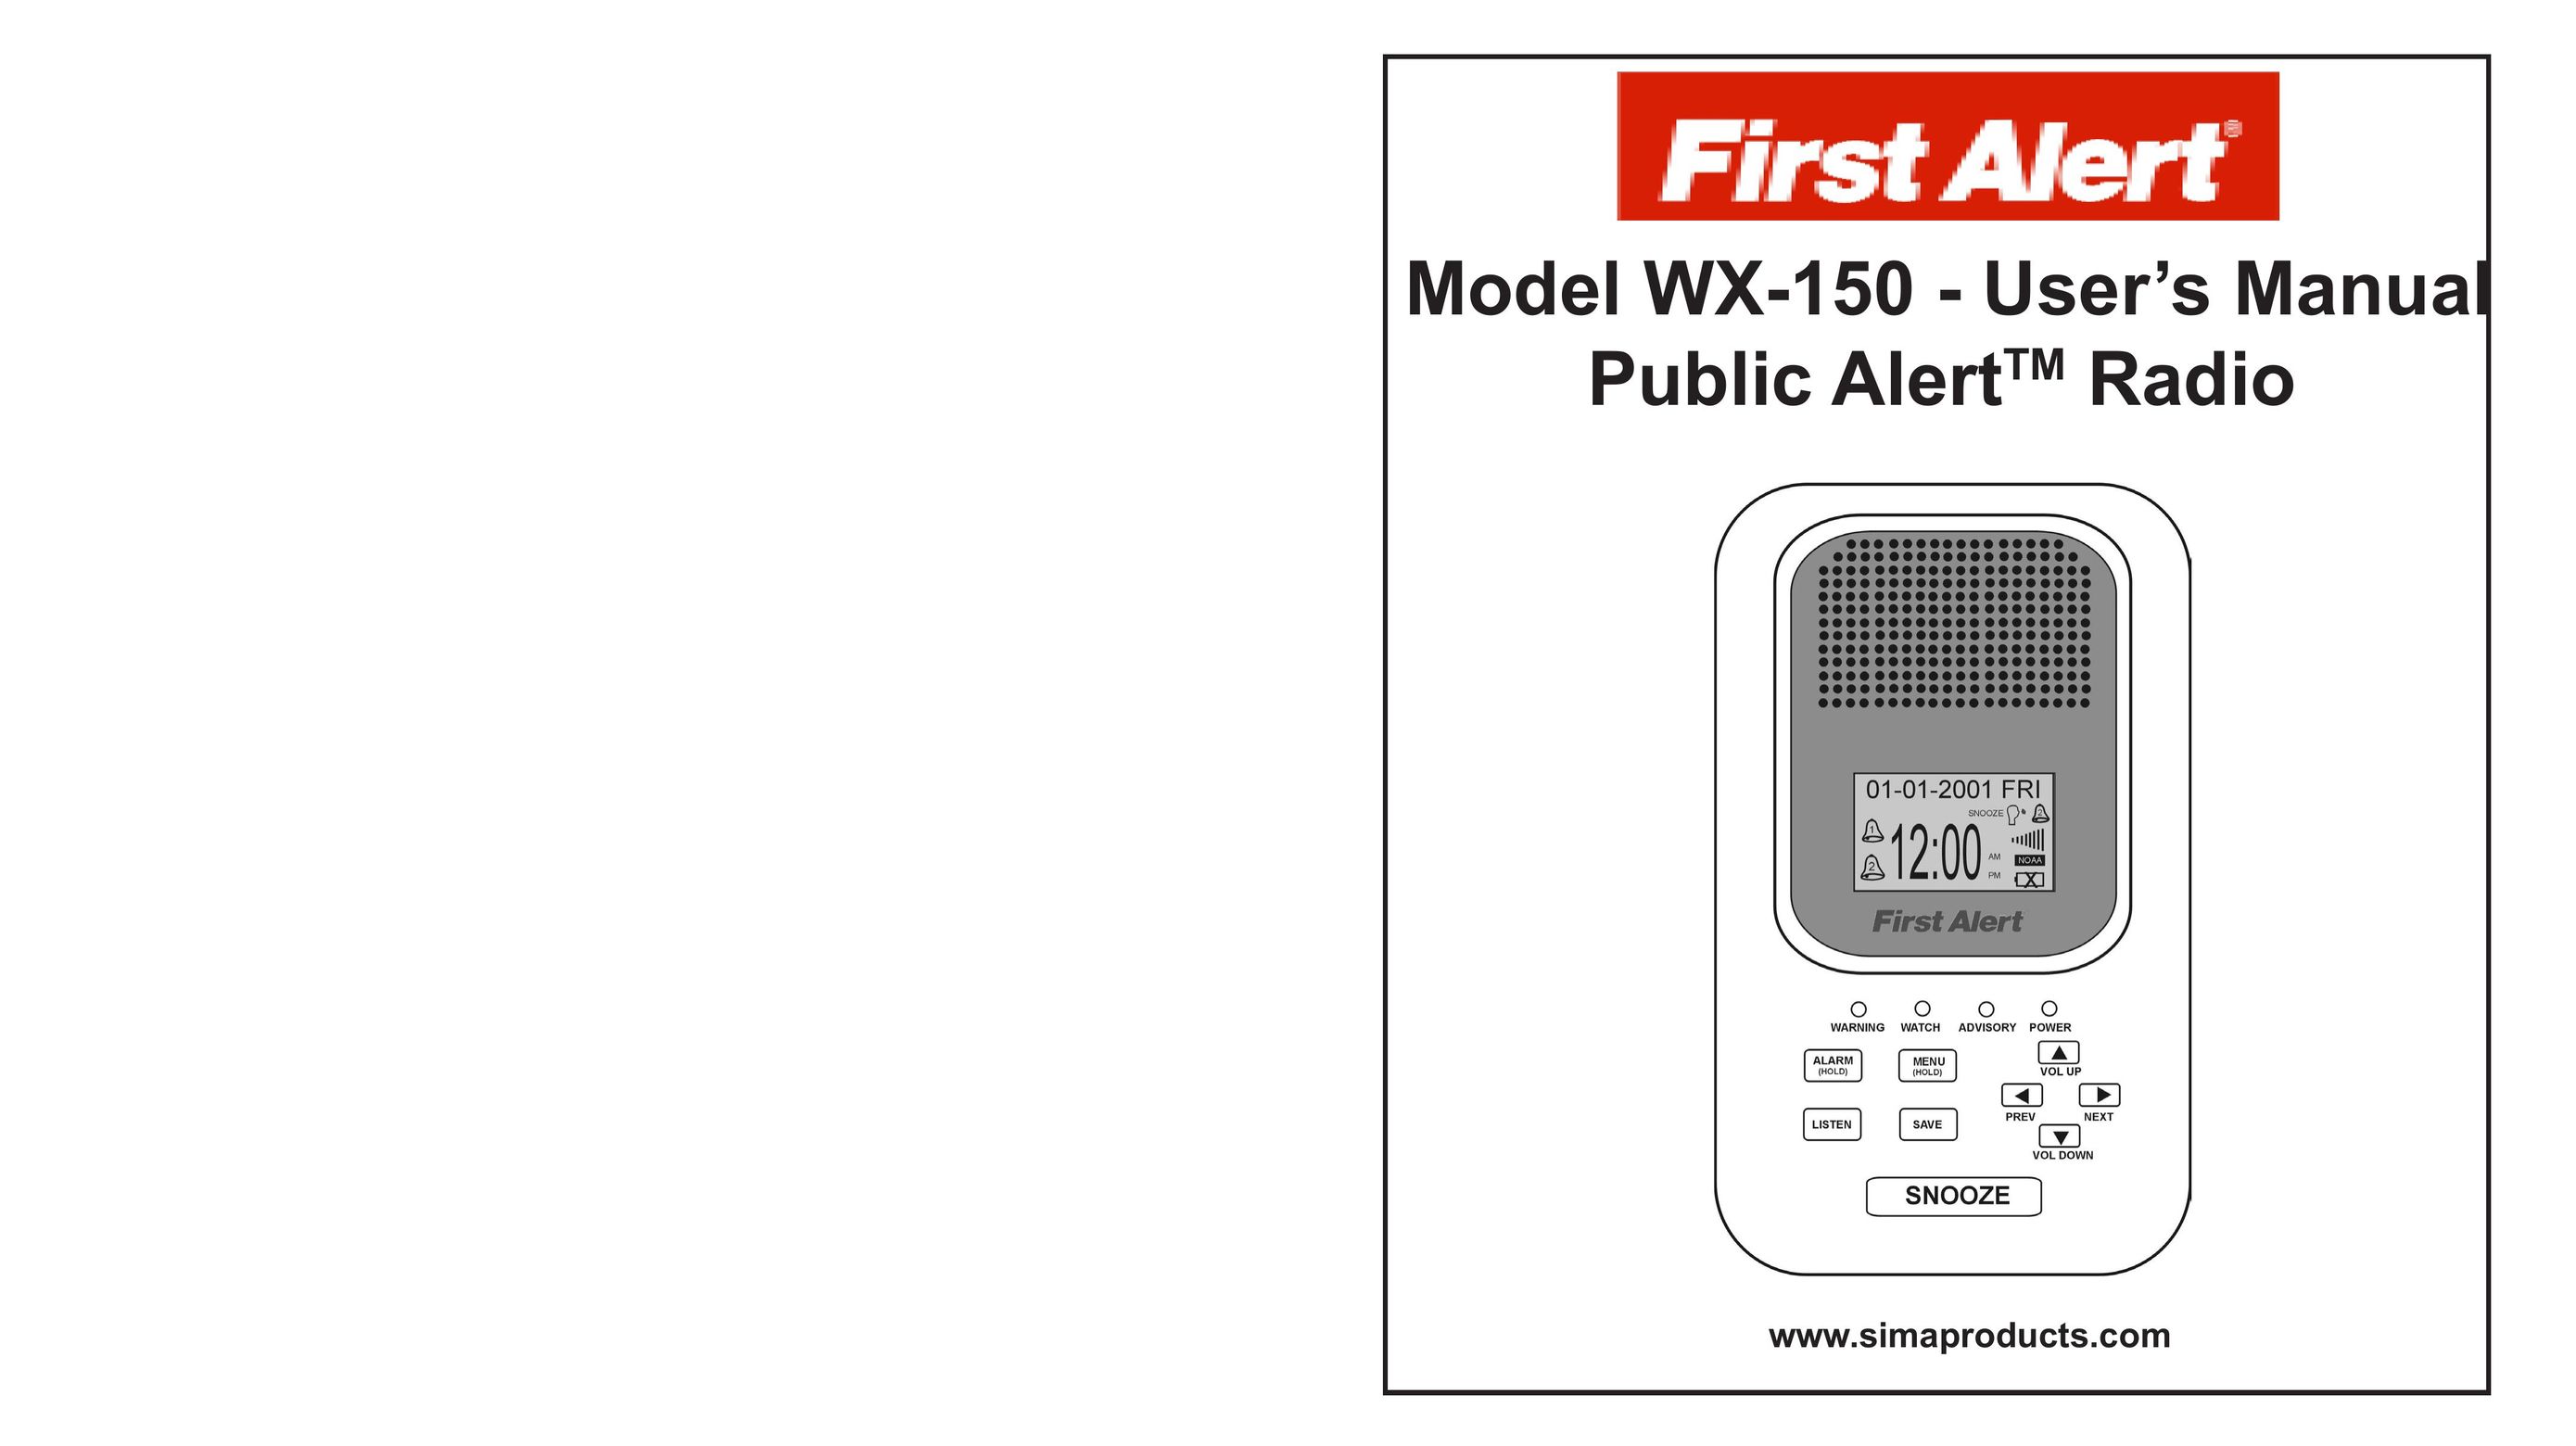 First Alert WX-150 Portable Radio User Manual